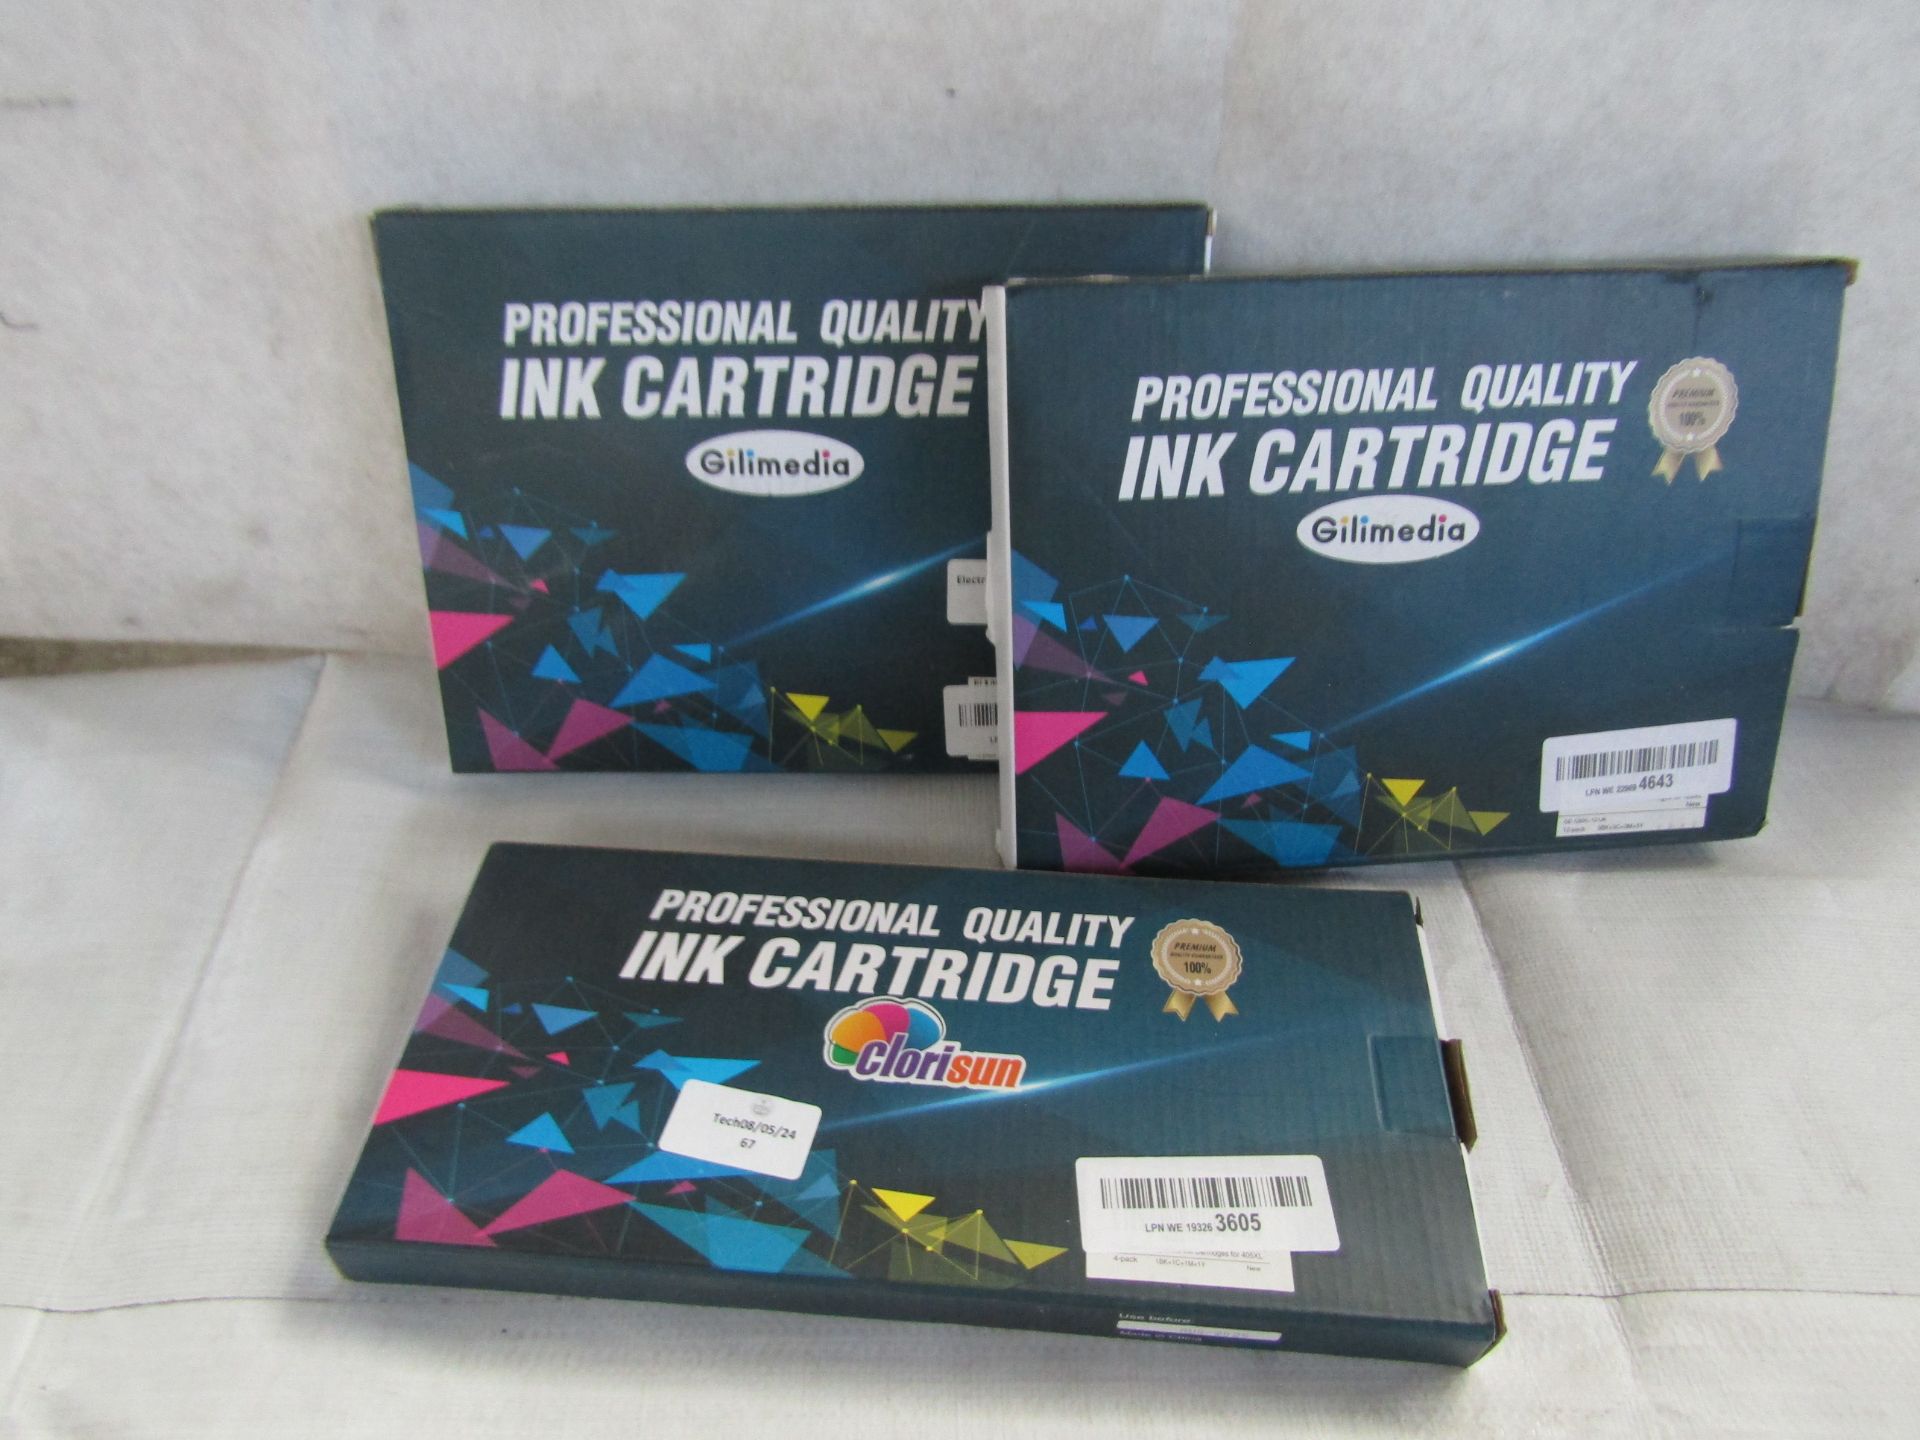 3x Items Being - 2x Gilimedia Professional Quality Ink Cartridge & 1x Clorisun Professional